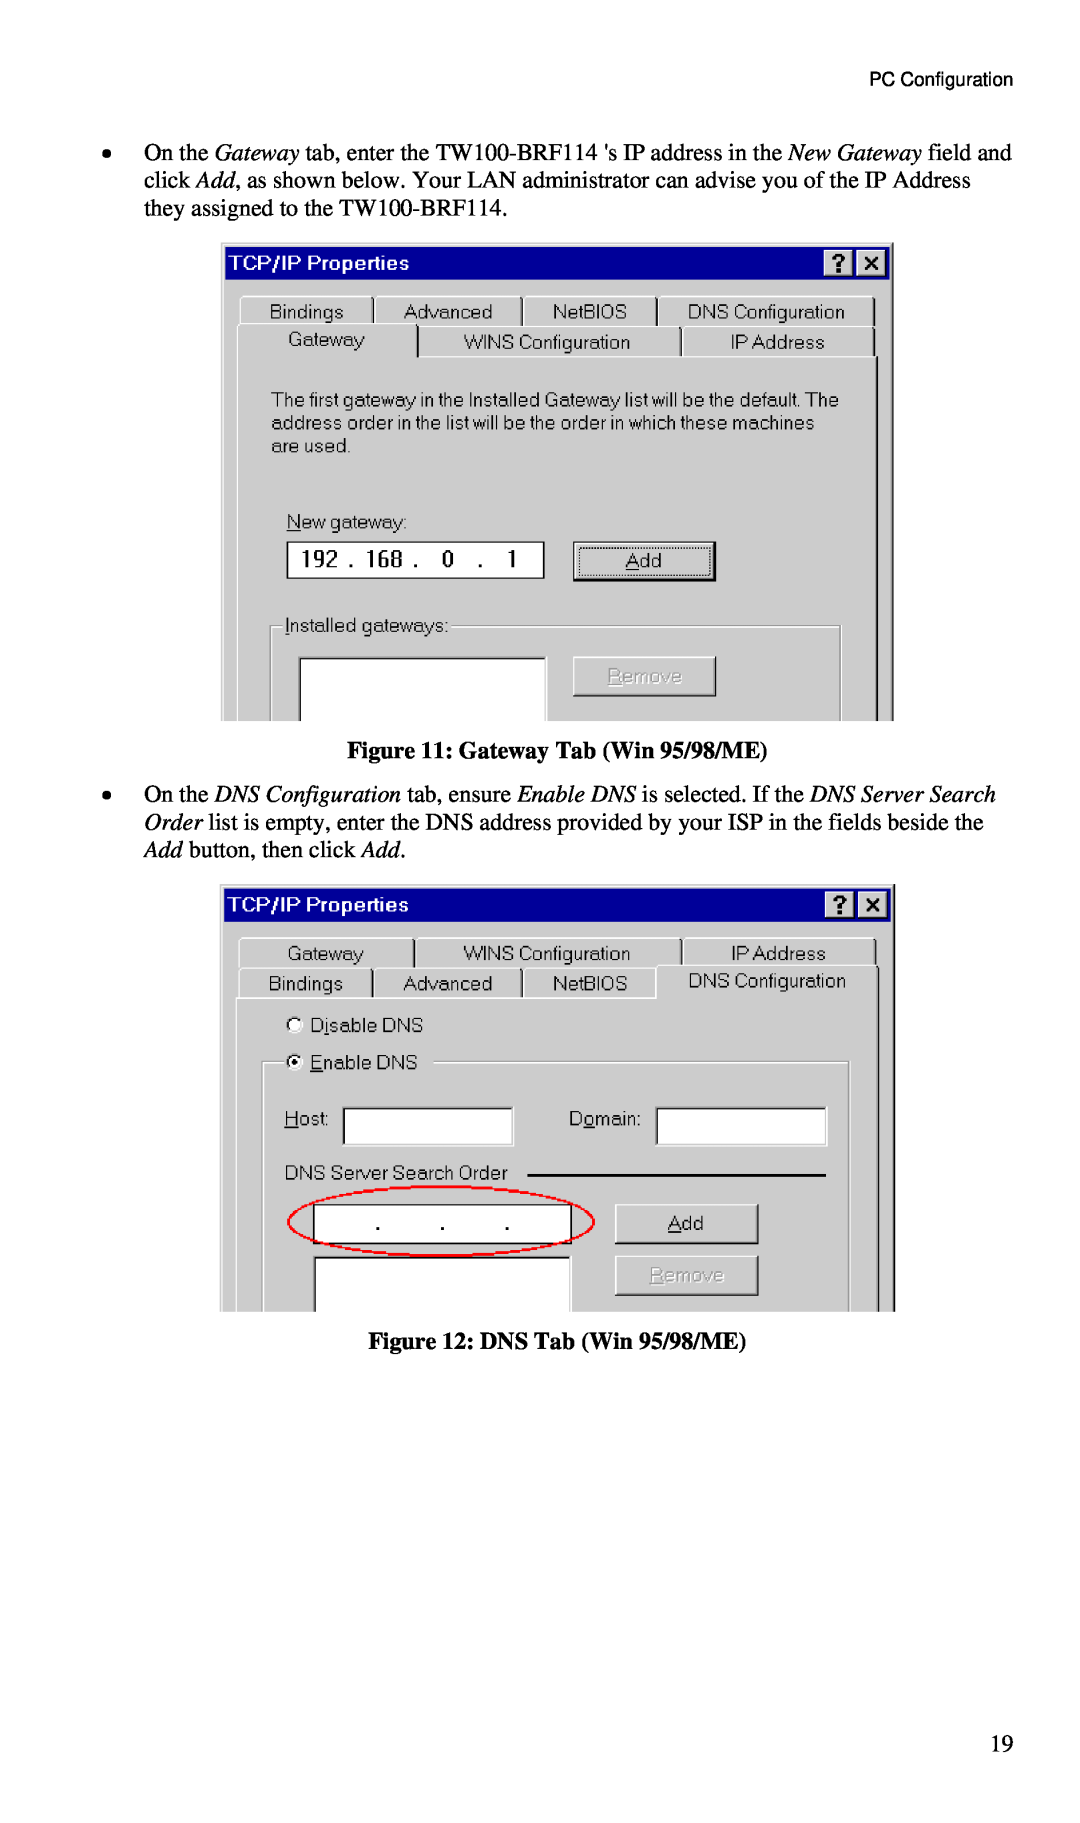 TRENDnet BRF114 manual Gateway Tab Win 95/98/ME, DNS Tab Win 95/98/ME, PC Configuration 